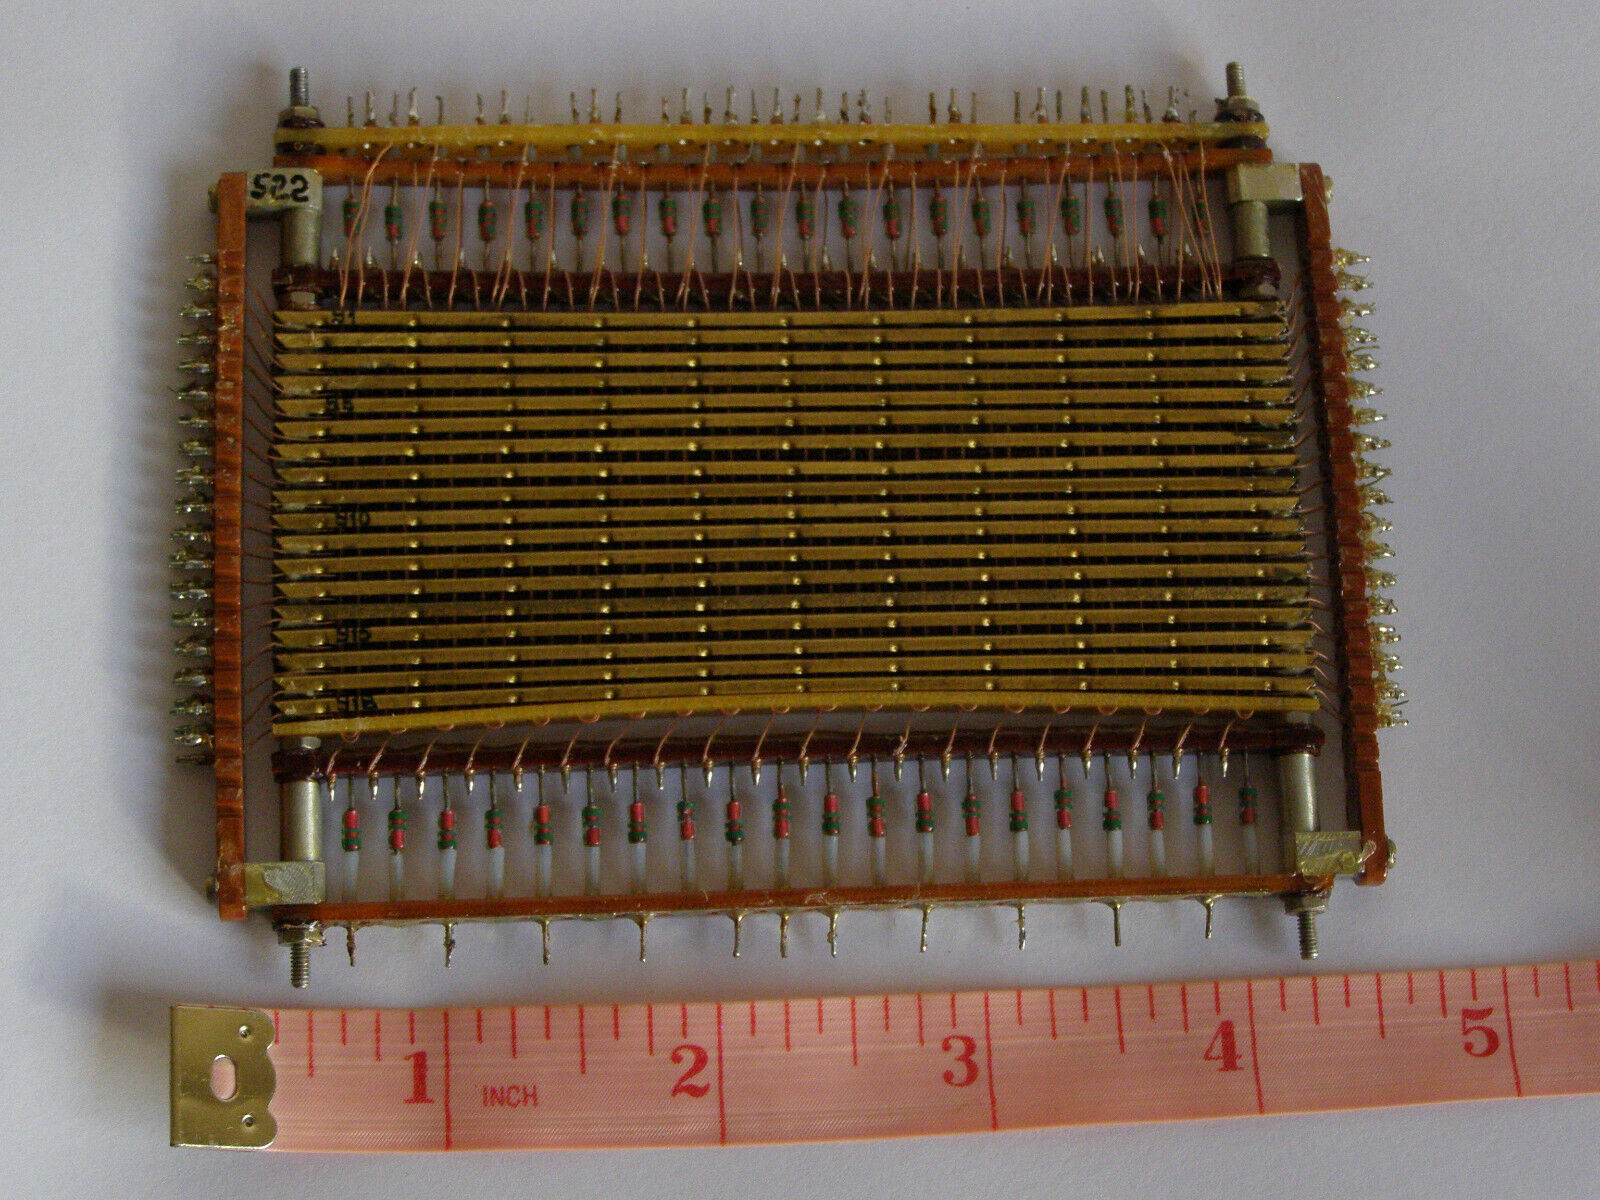 USSR Military Onboard Digital Computer Magnetic Ferrite Core Memory Board ROM